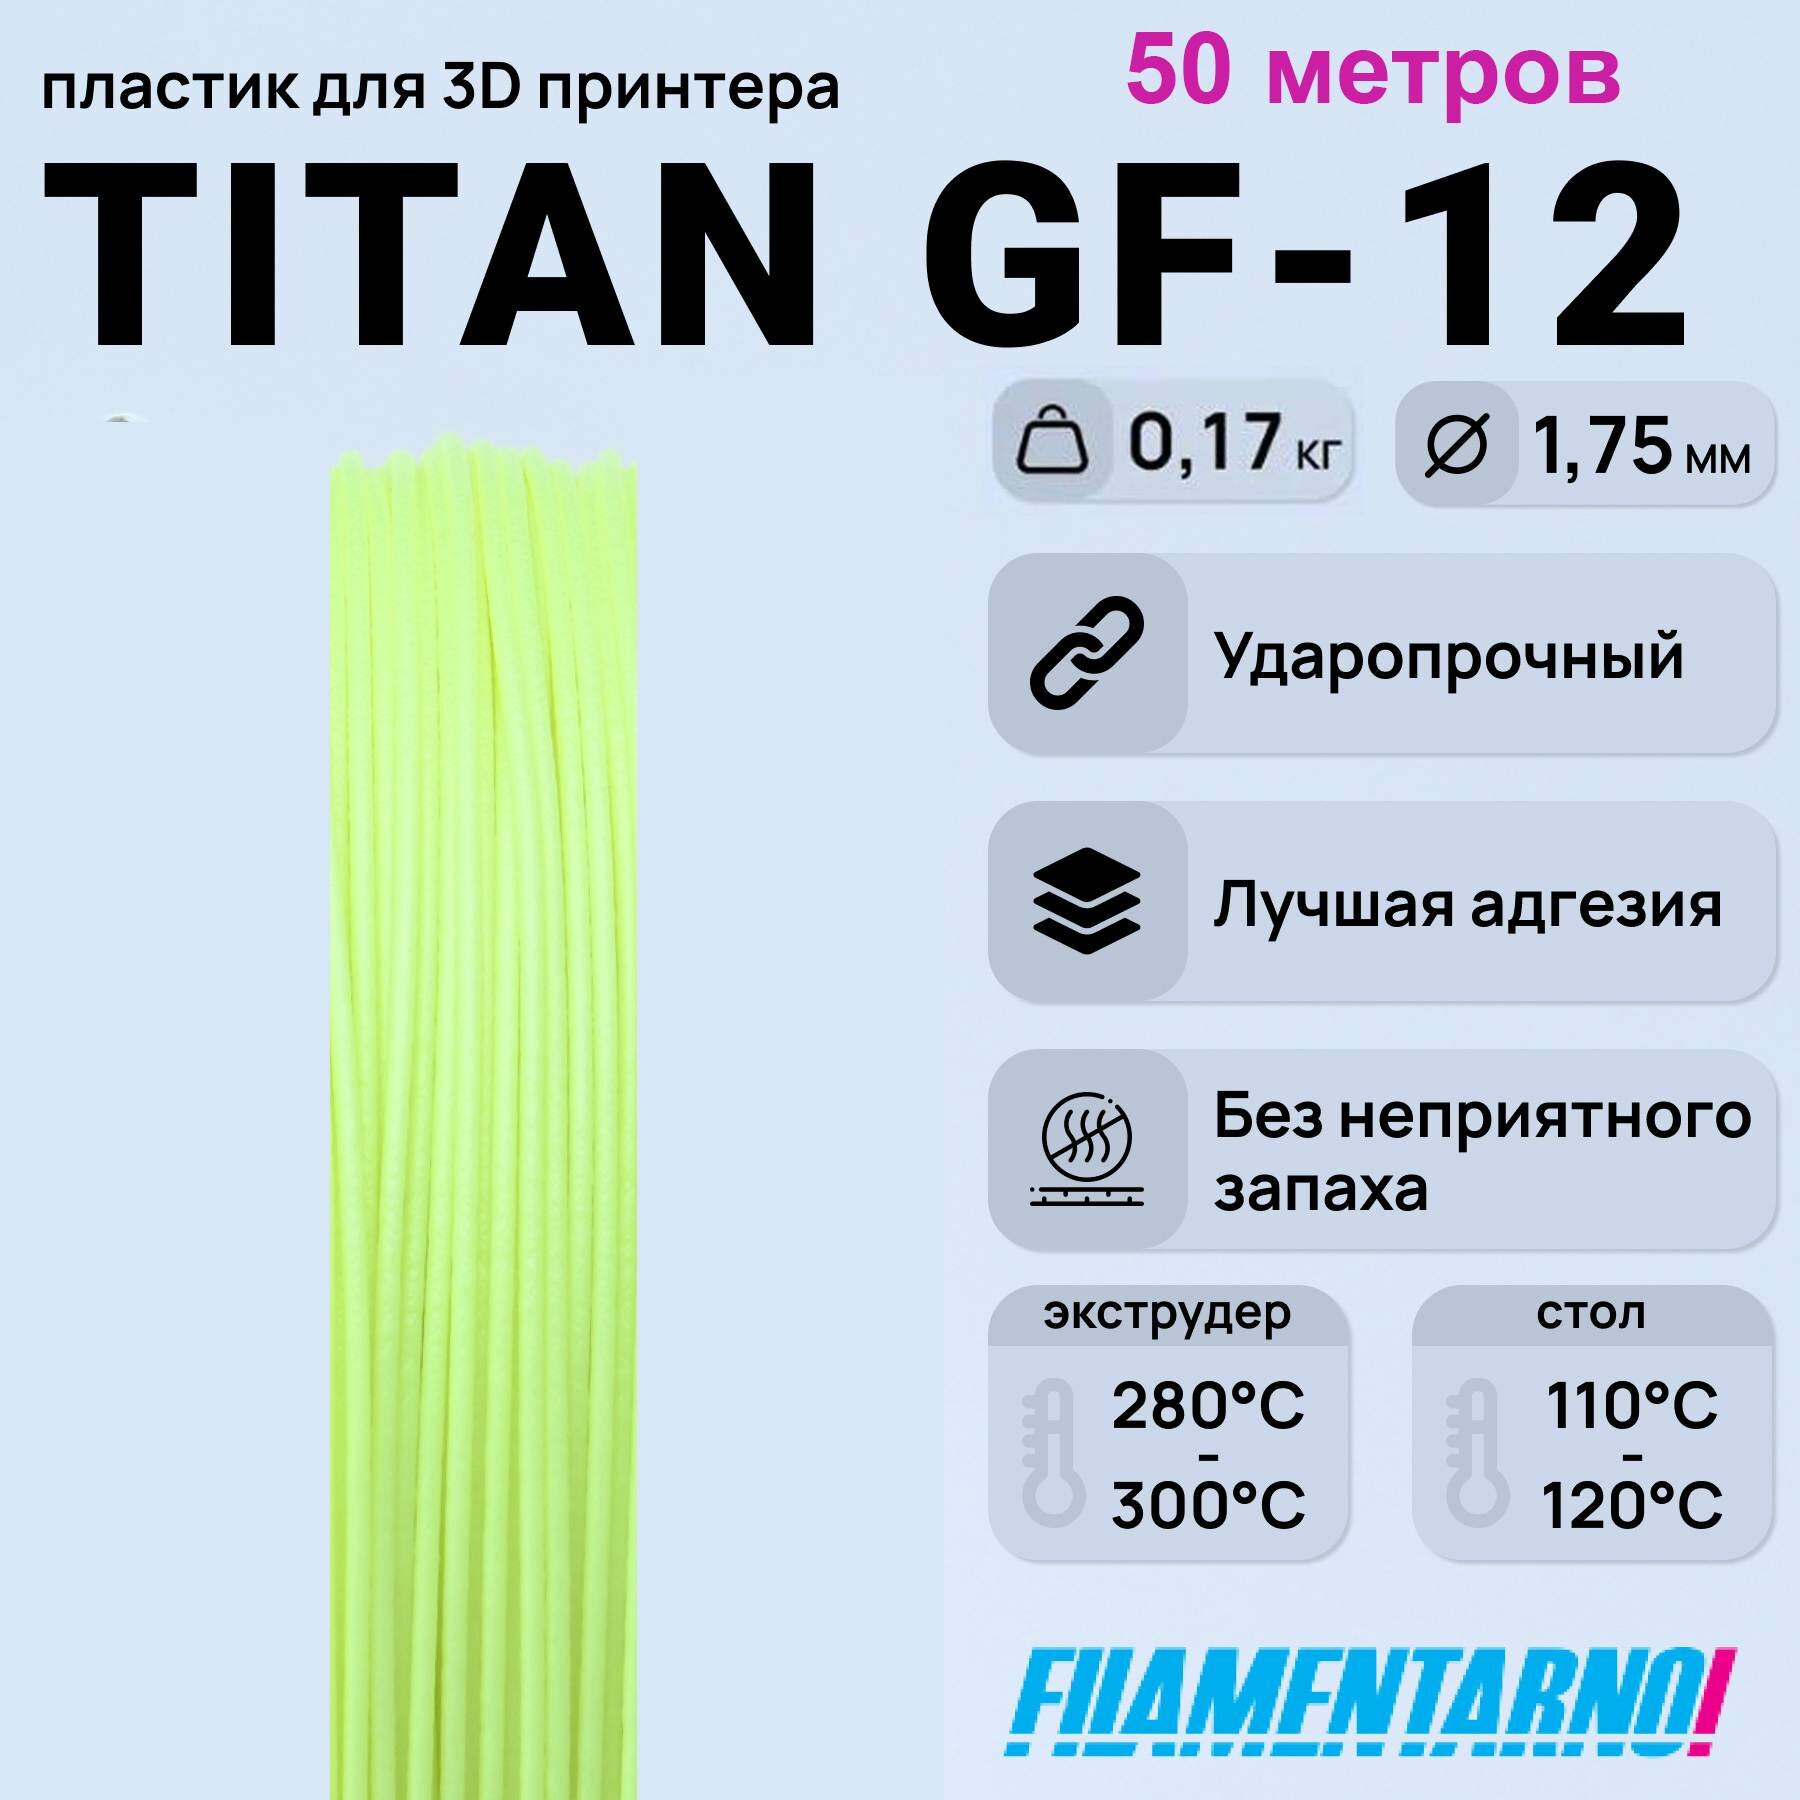 ABS Titan GF-12 лимон моток 50 м, 1,75 мм, пластик Filamentarno для 3D-принтера